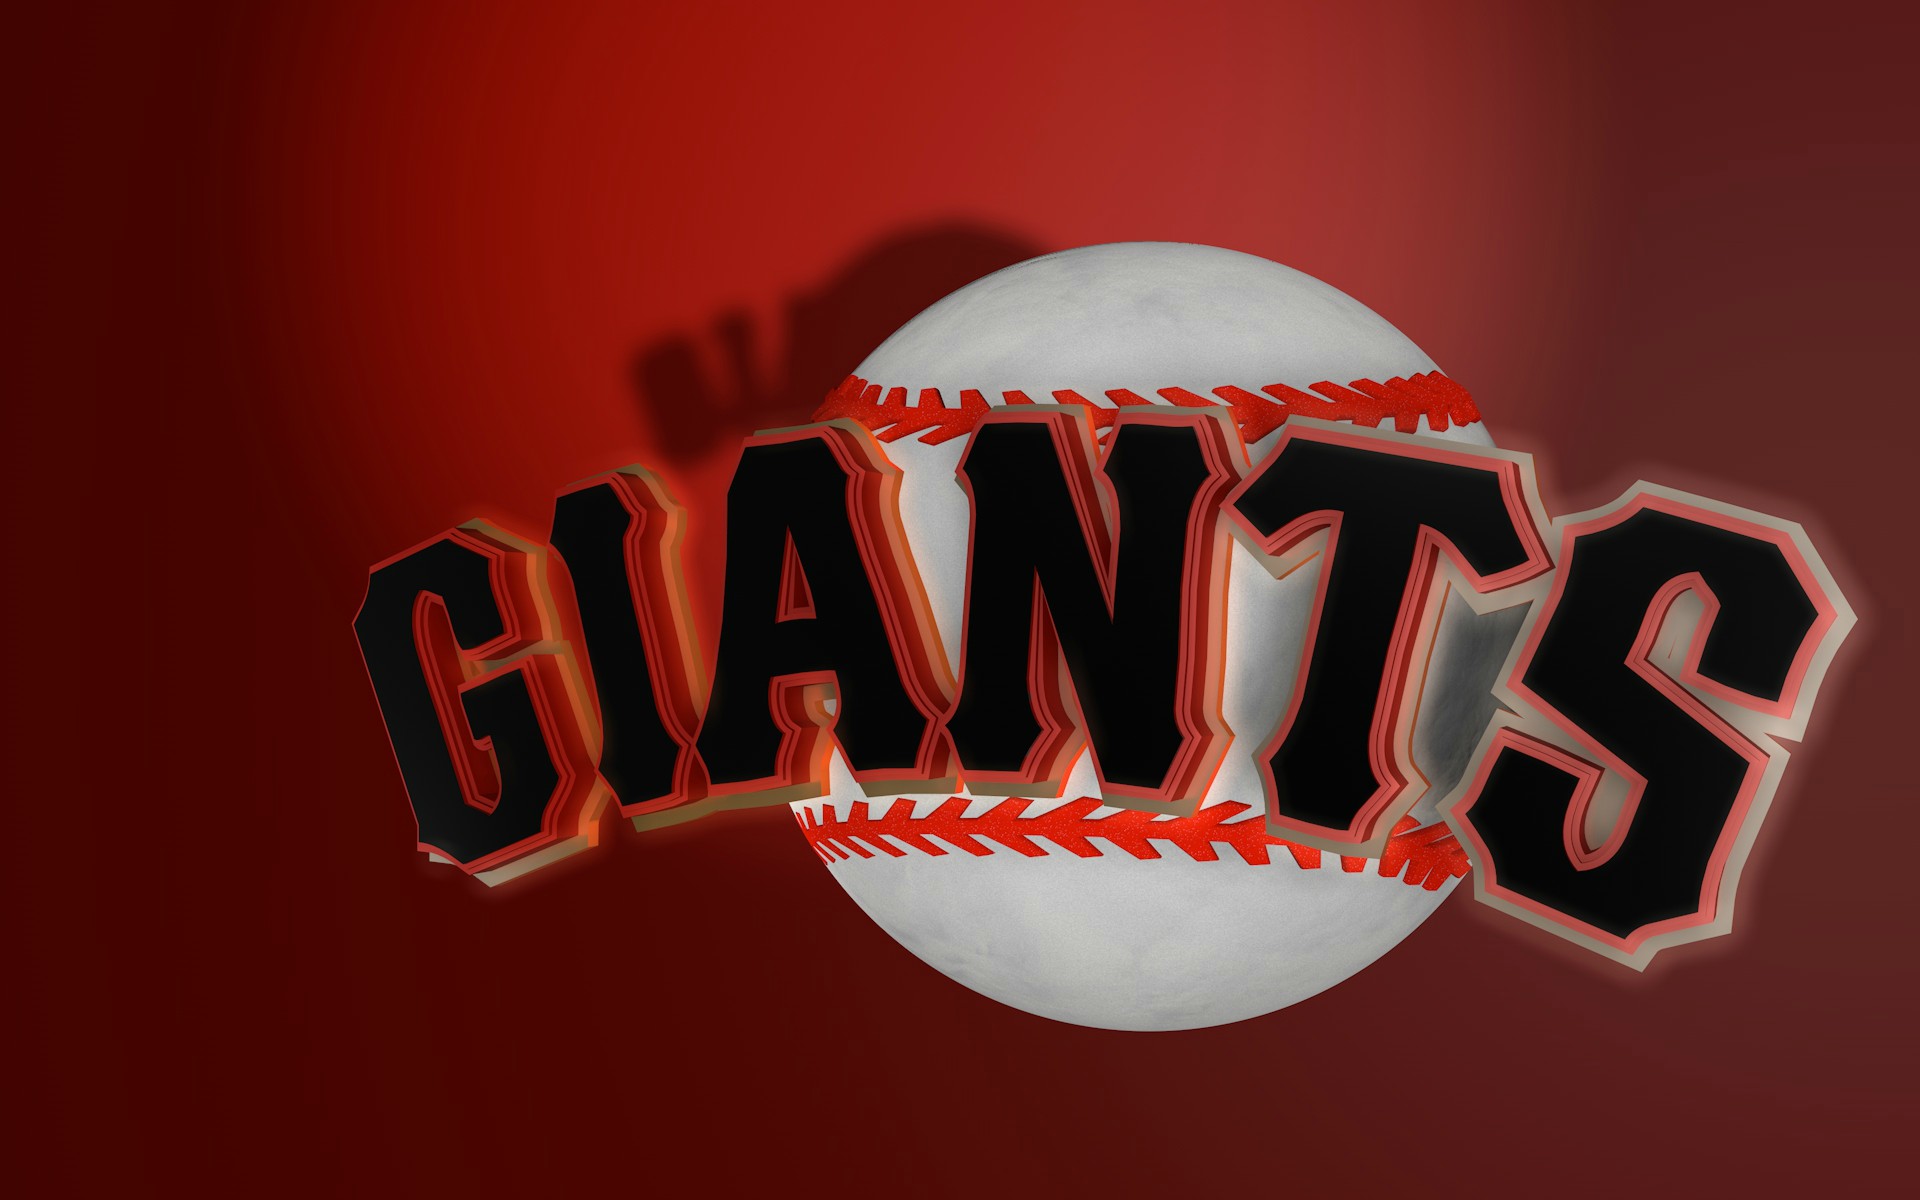 Sf Giants Logo